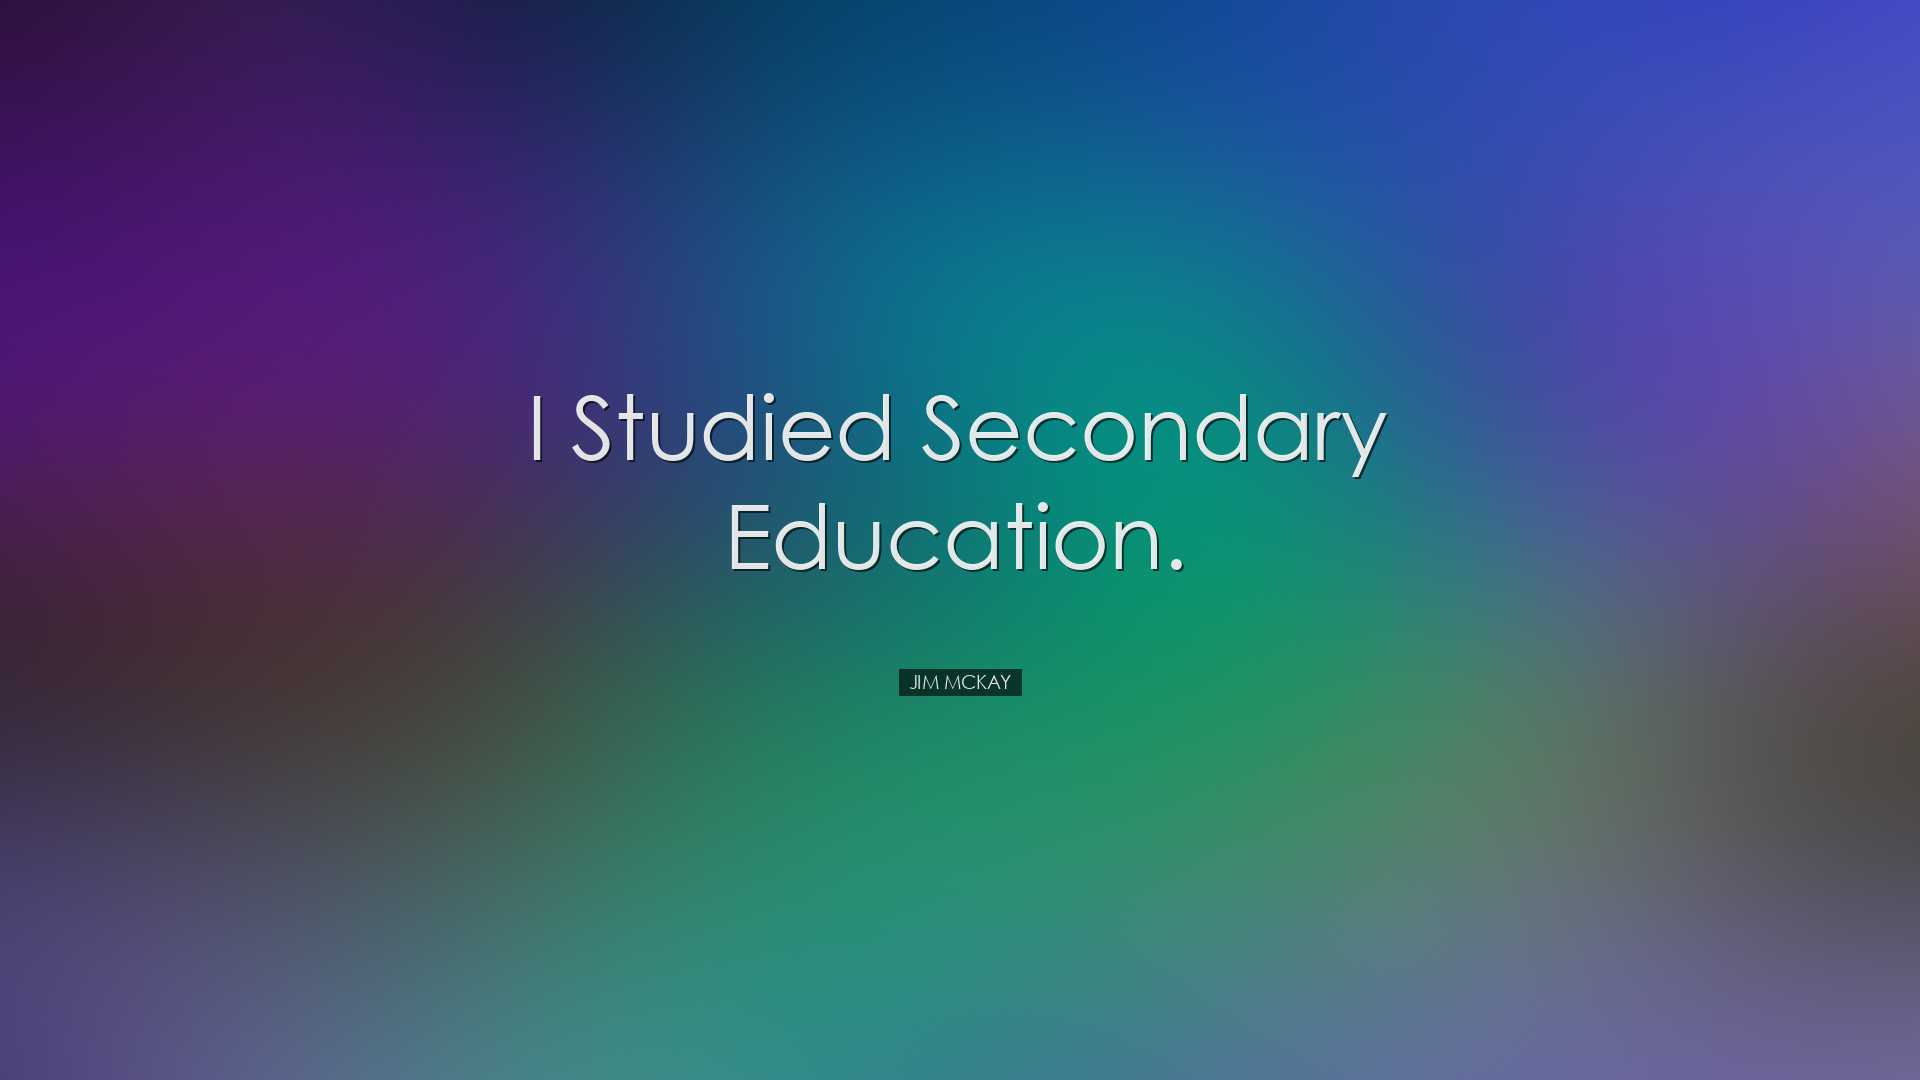 I studied secondary education. - Jim McKay